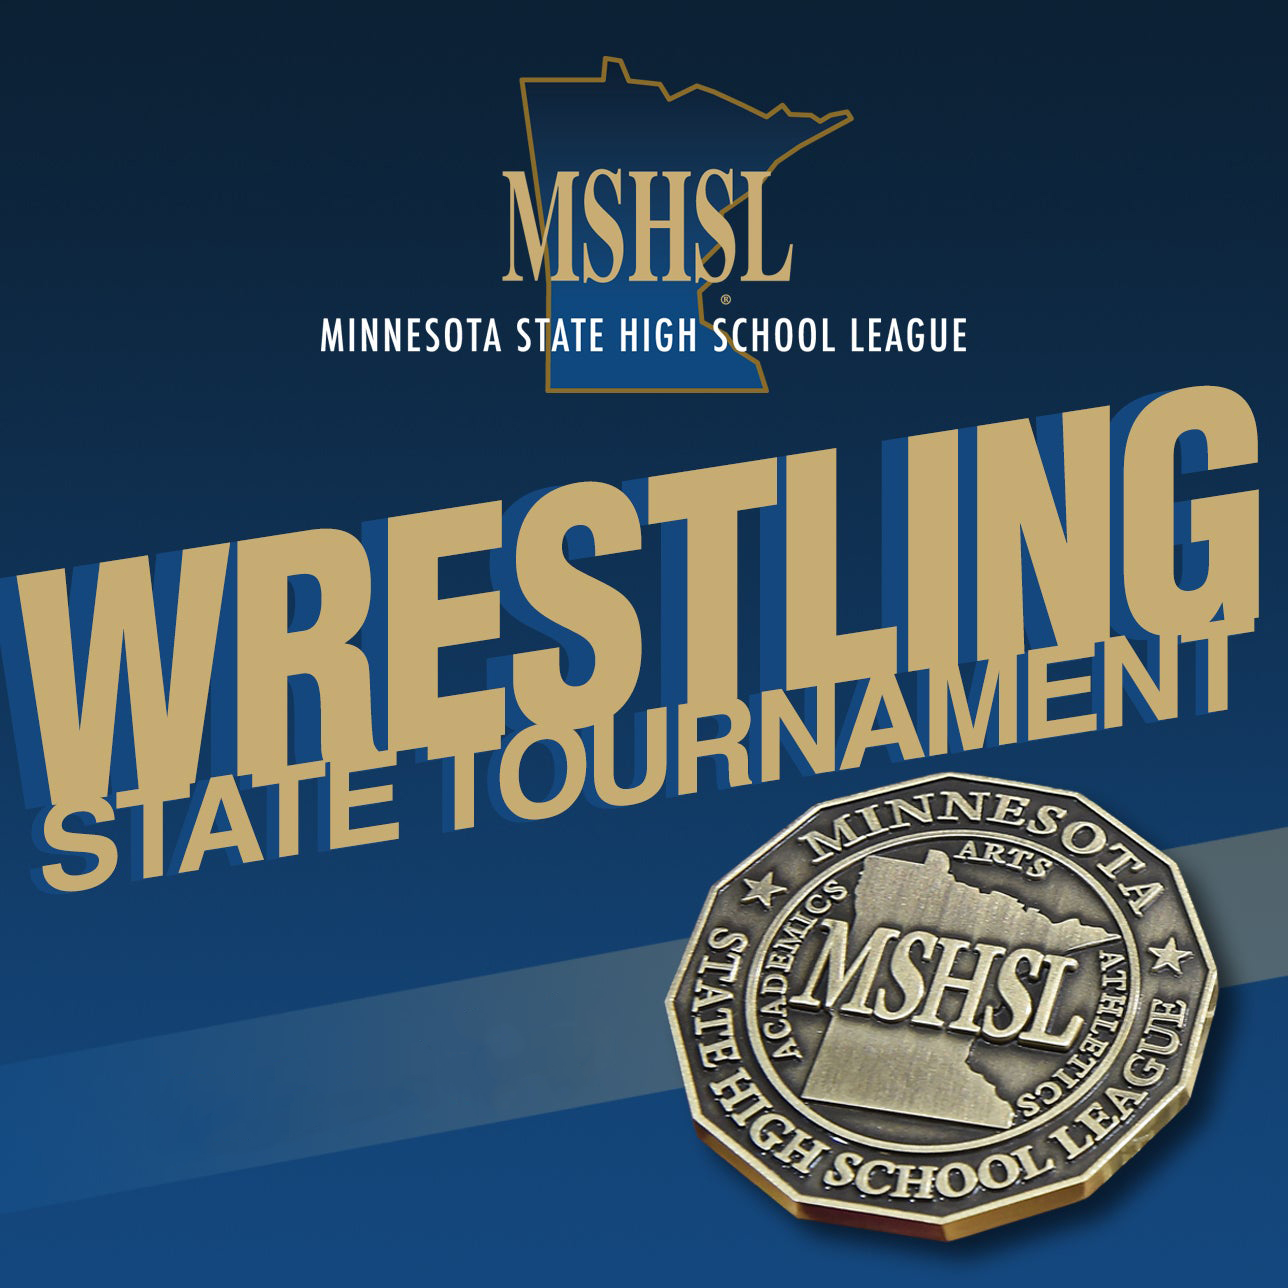 MSHSL State Wrestling Tournament at Xcel Energy Center